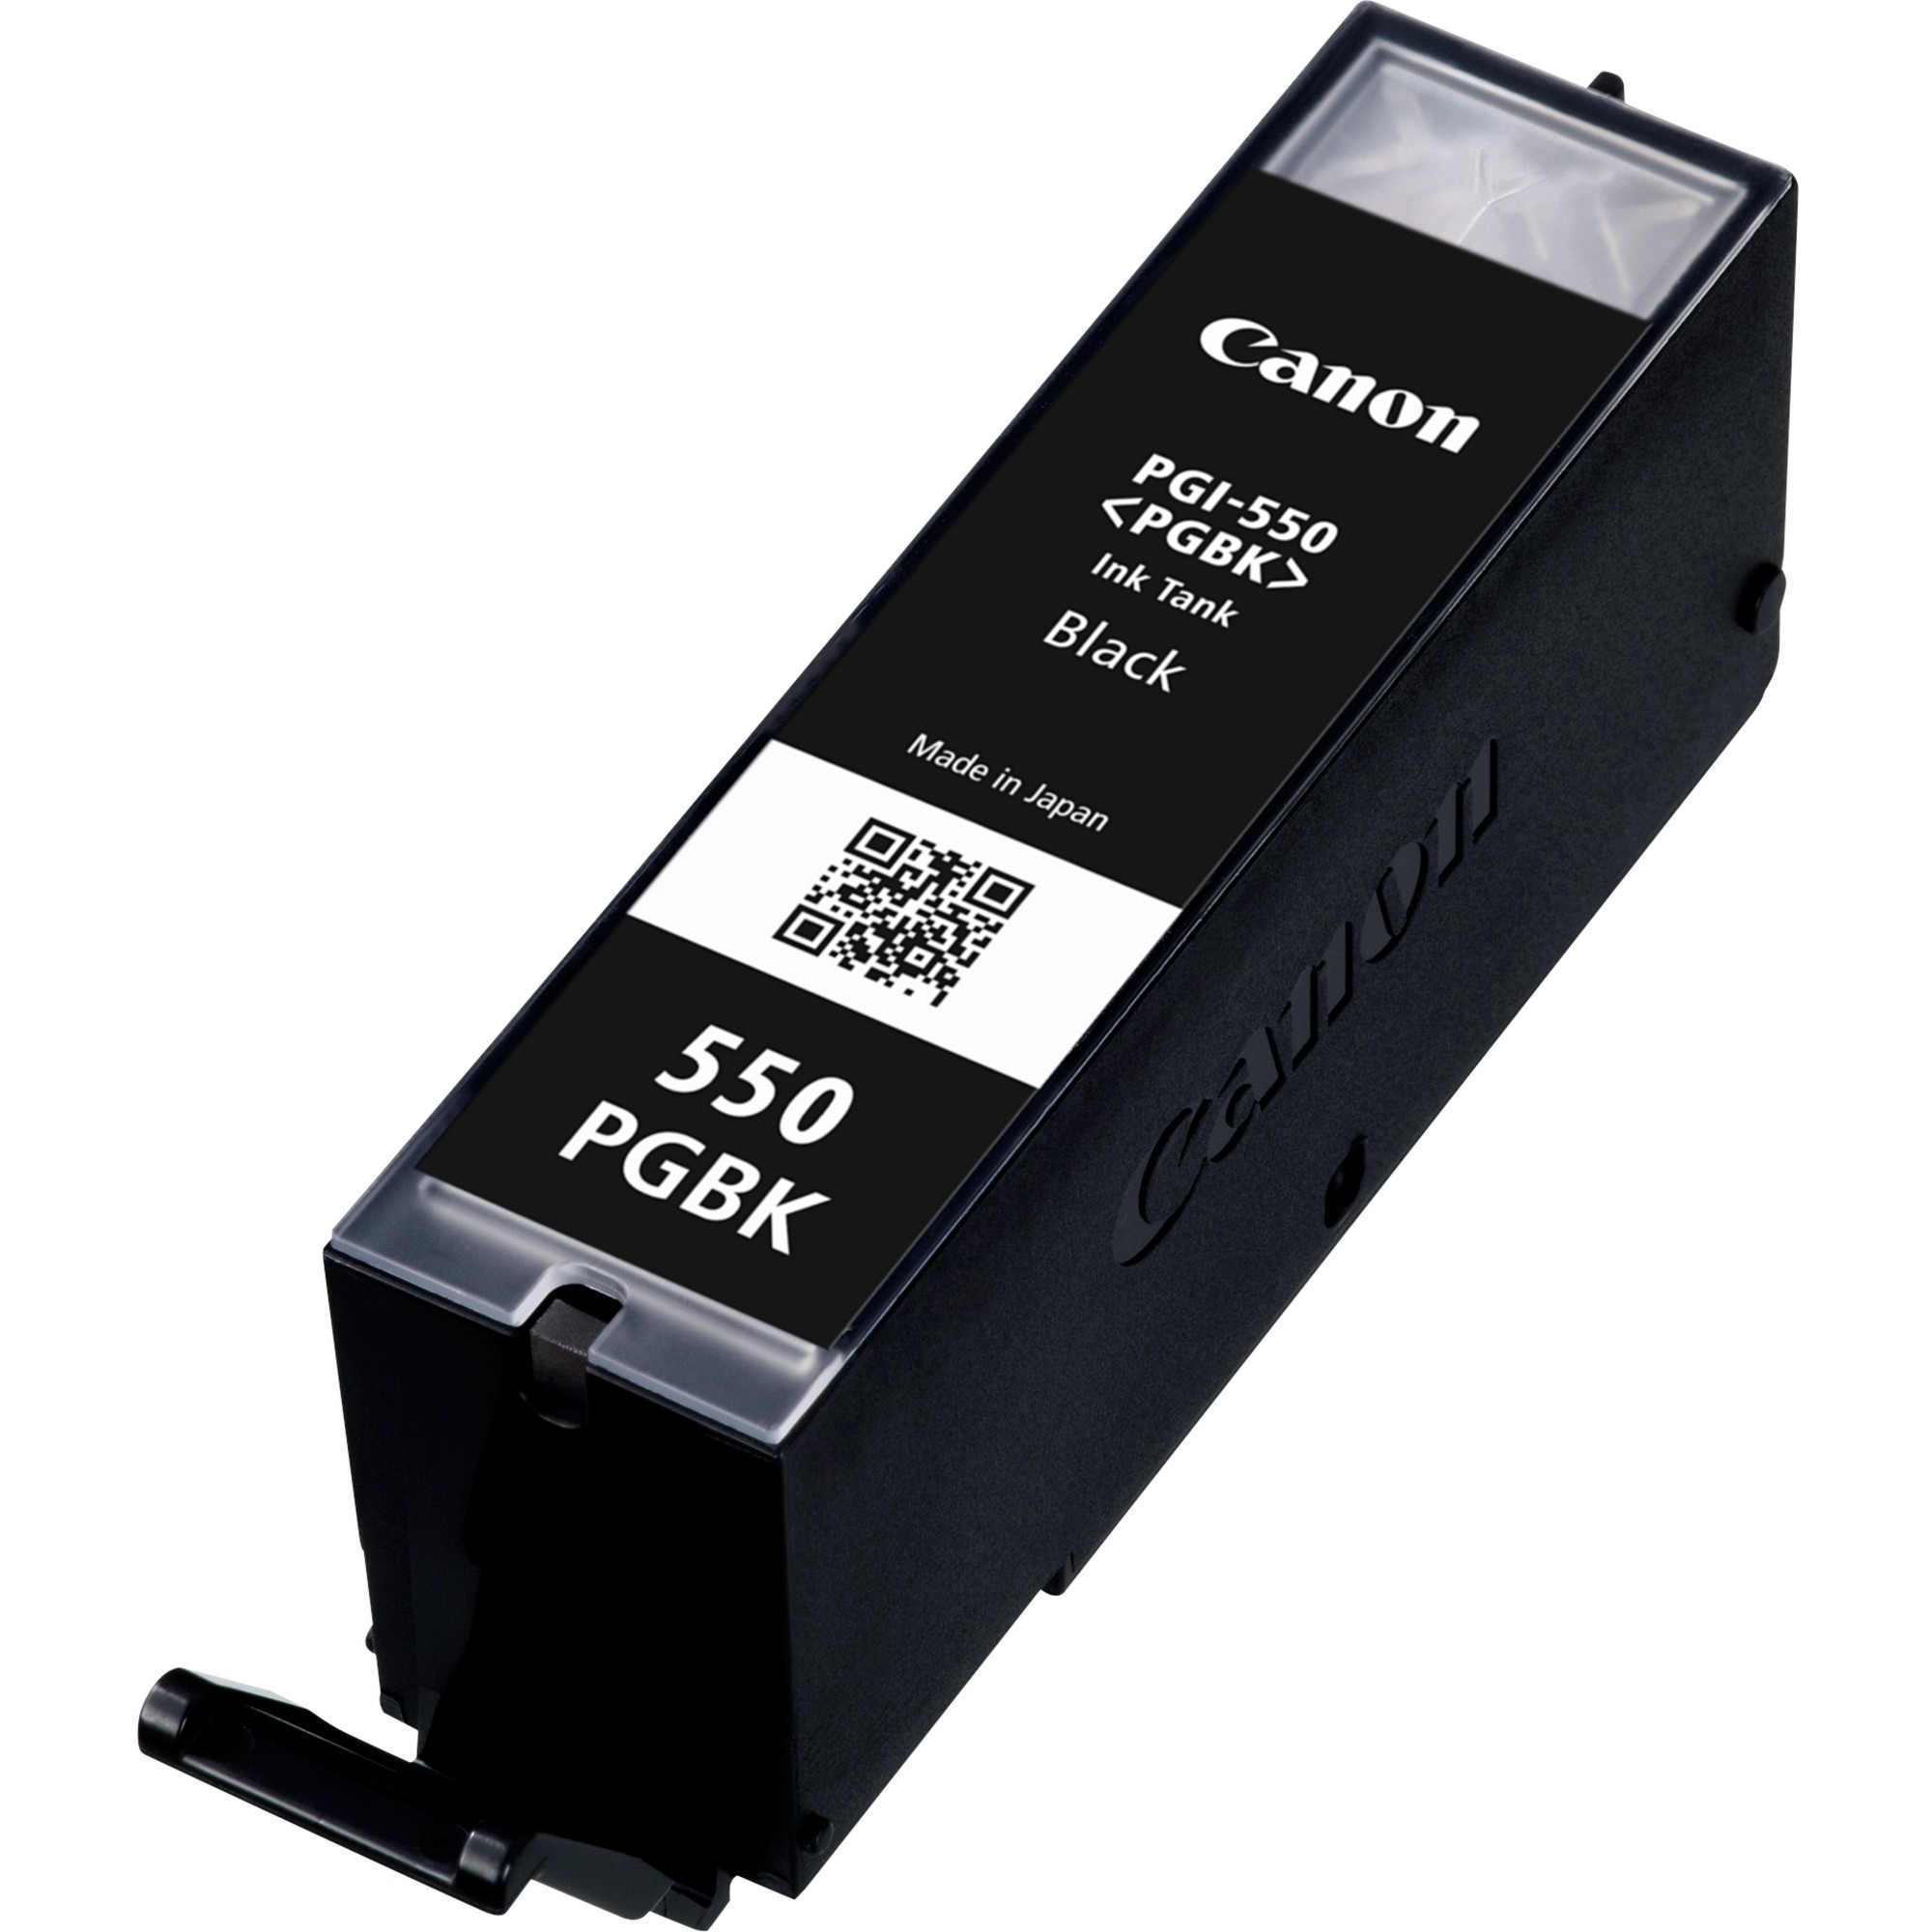 Canon PGI-550 Black Ink Cartridge